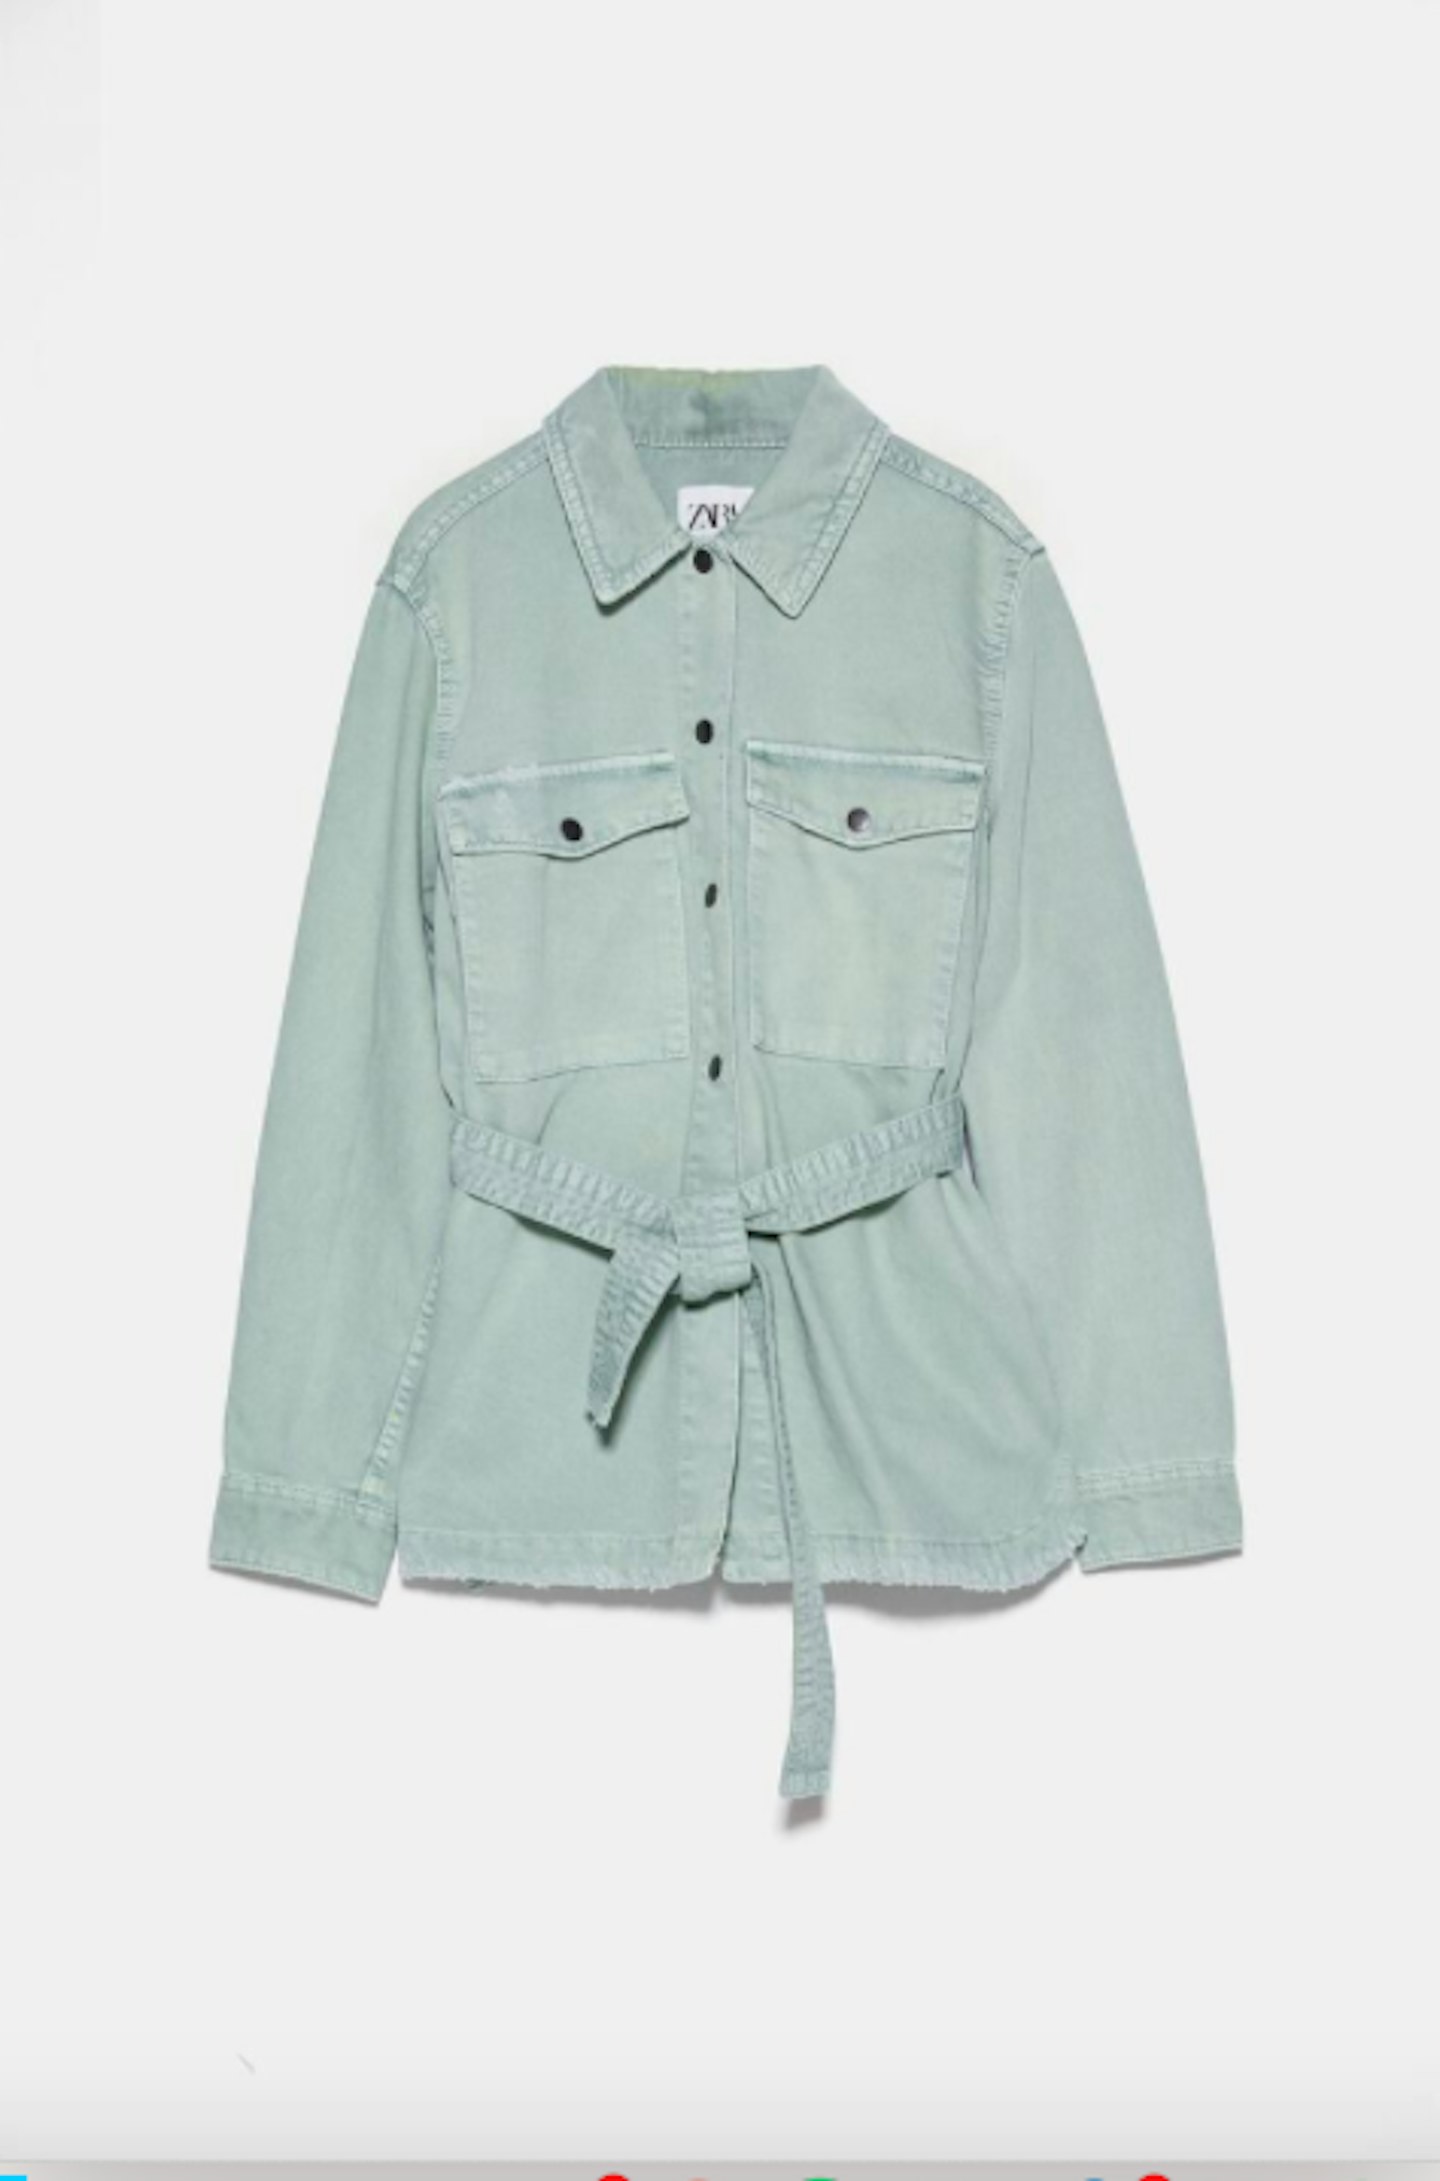 Zara, Belted Jacket, £29.99